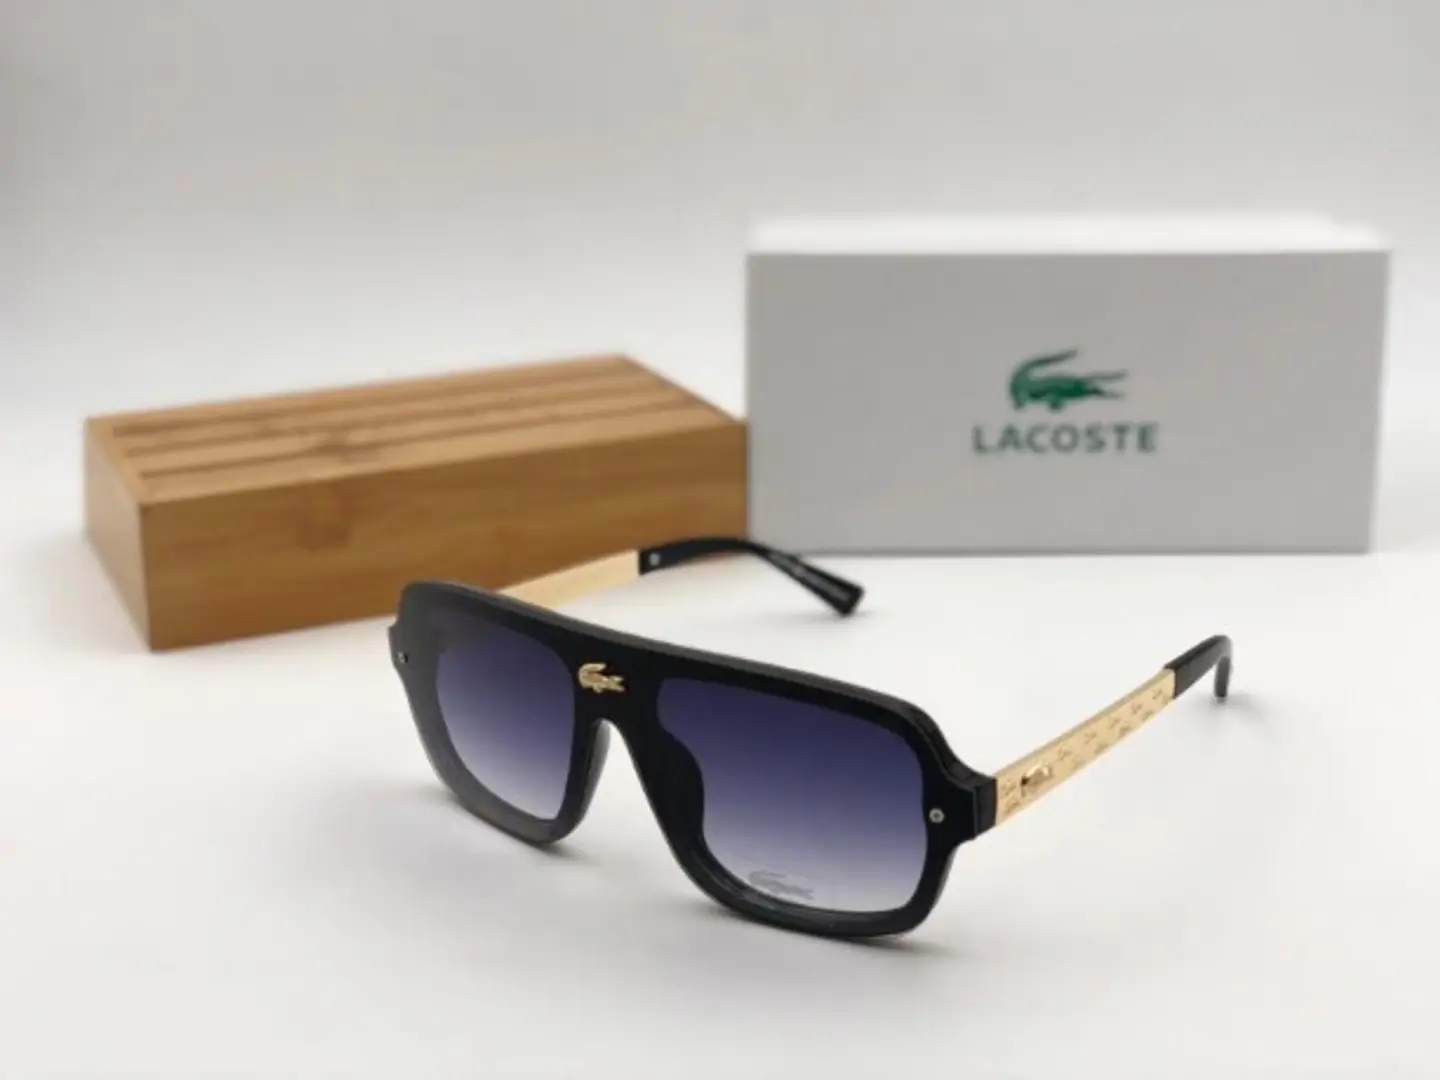 Soft Square Frame Sunglasses In Black-Gold – Victoria Beckham